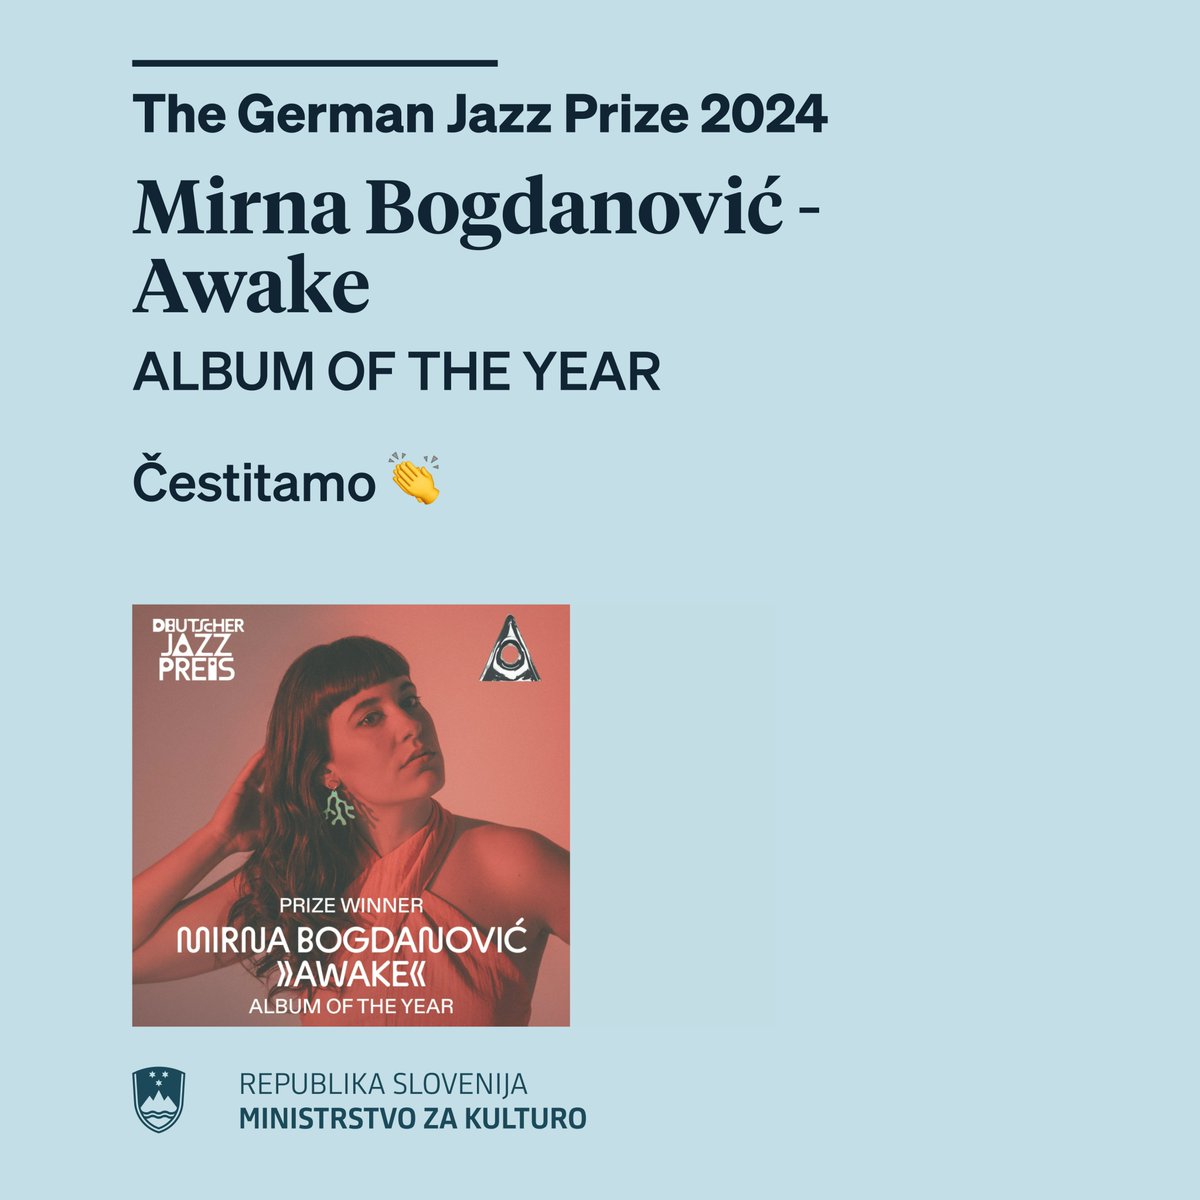 Mirna Bogdanović Mirna Bogdanović je dobitnica nagrade @jazzpreis (The German Jazz Prize 2024) za NAJ ALBUM LETA (ALBUM OF THE YEAR) za album Awake.

Čestitamo 👏

#DeutscherJazzpreis #Jazzpreis24 #DJP24 #Jazz #GermanJazz